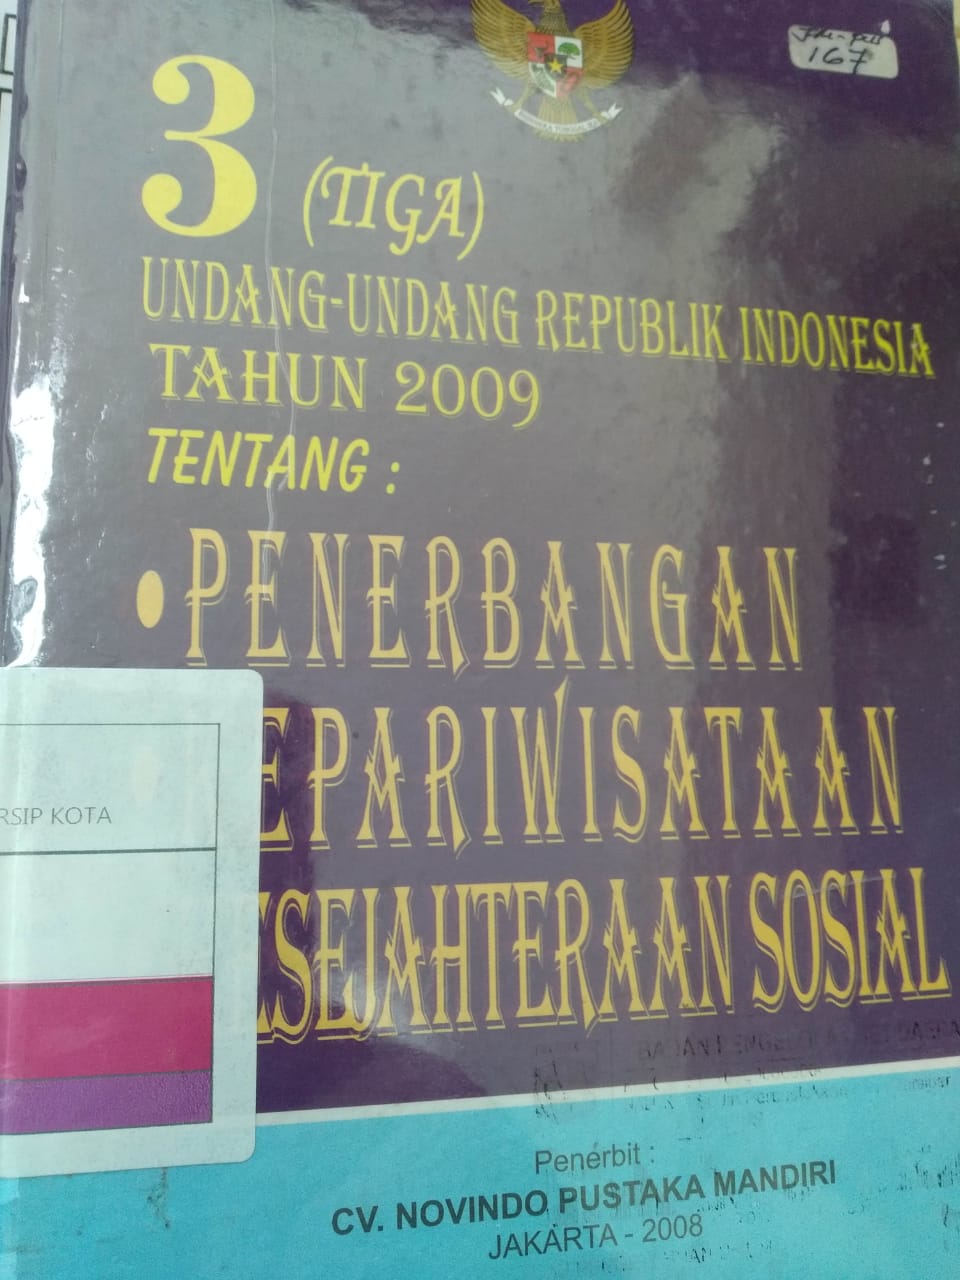 3 Undang-Undang Republik Indonesia Tahun 2009 : Tentang Penerbangan, Kepariwisataan, Kesejahteraan Sosial